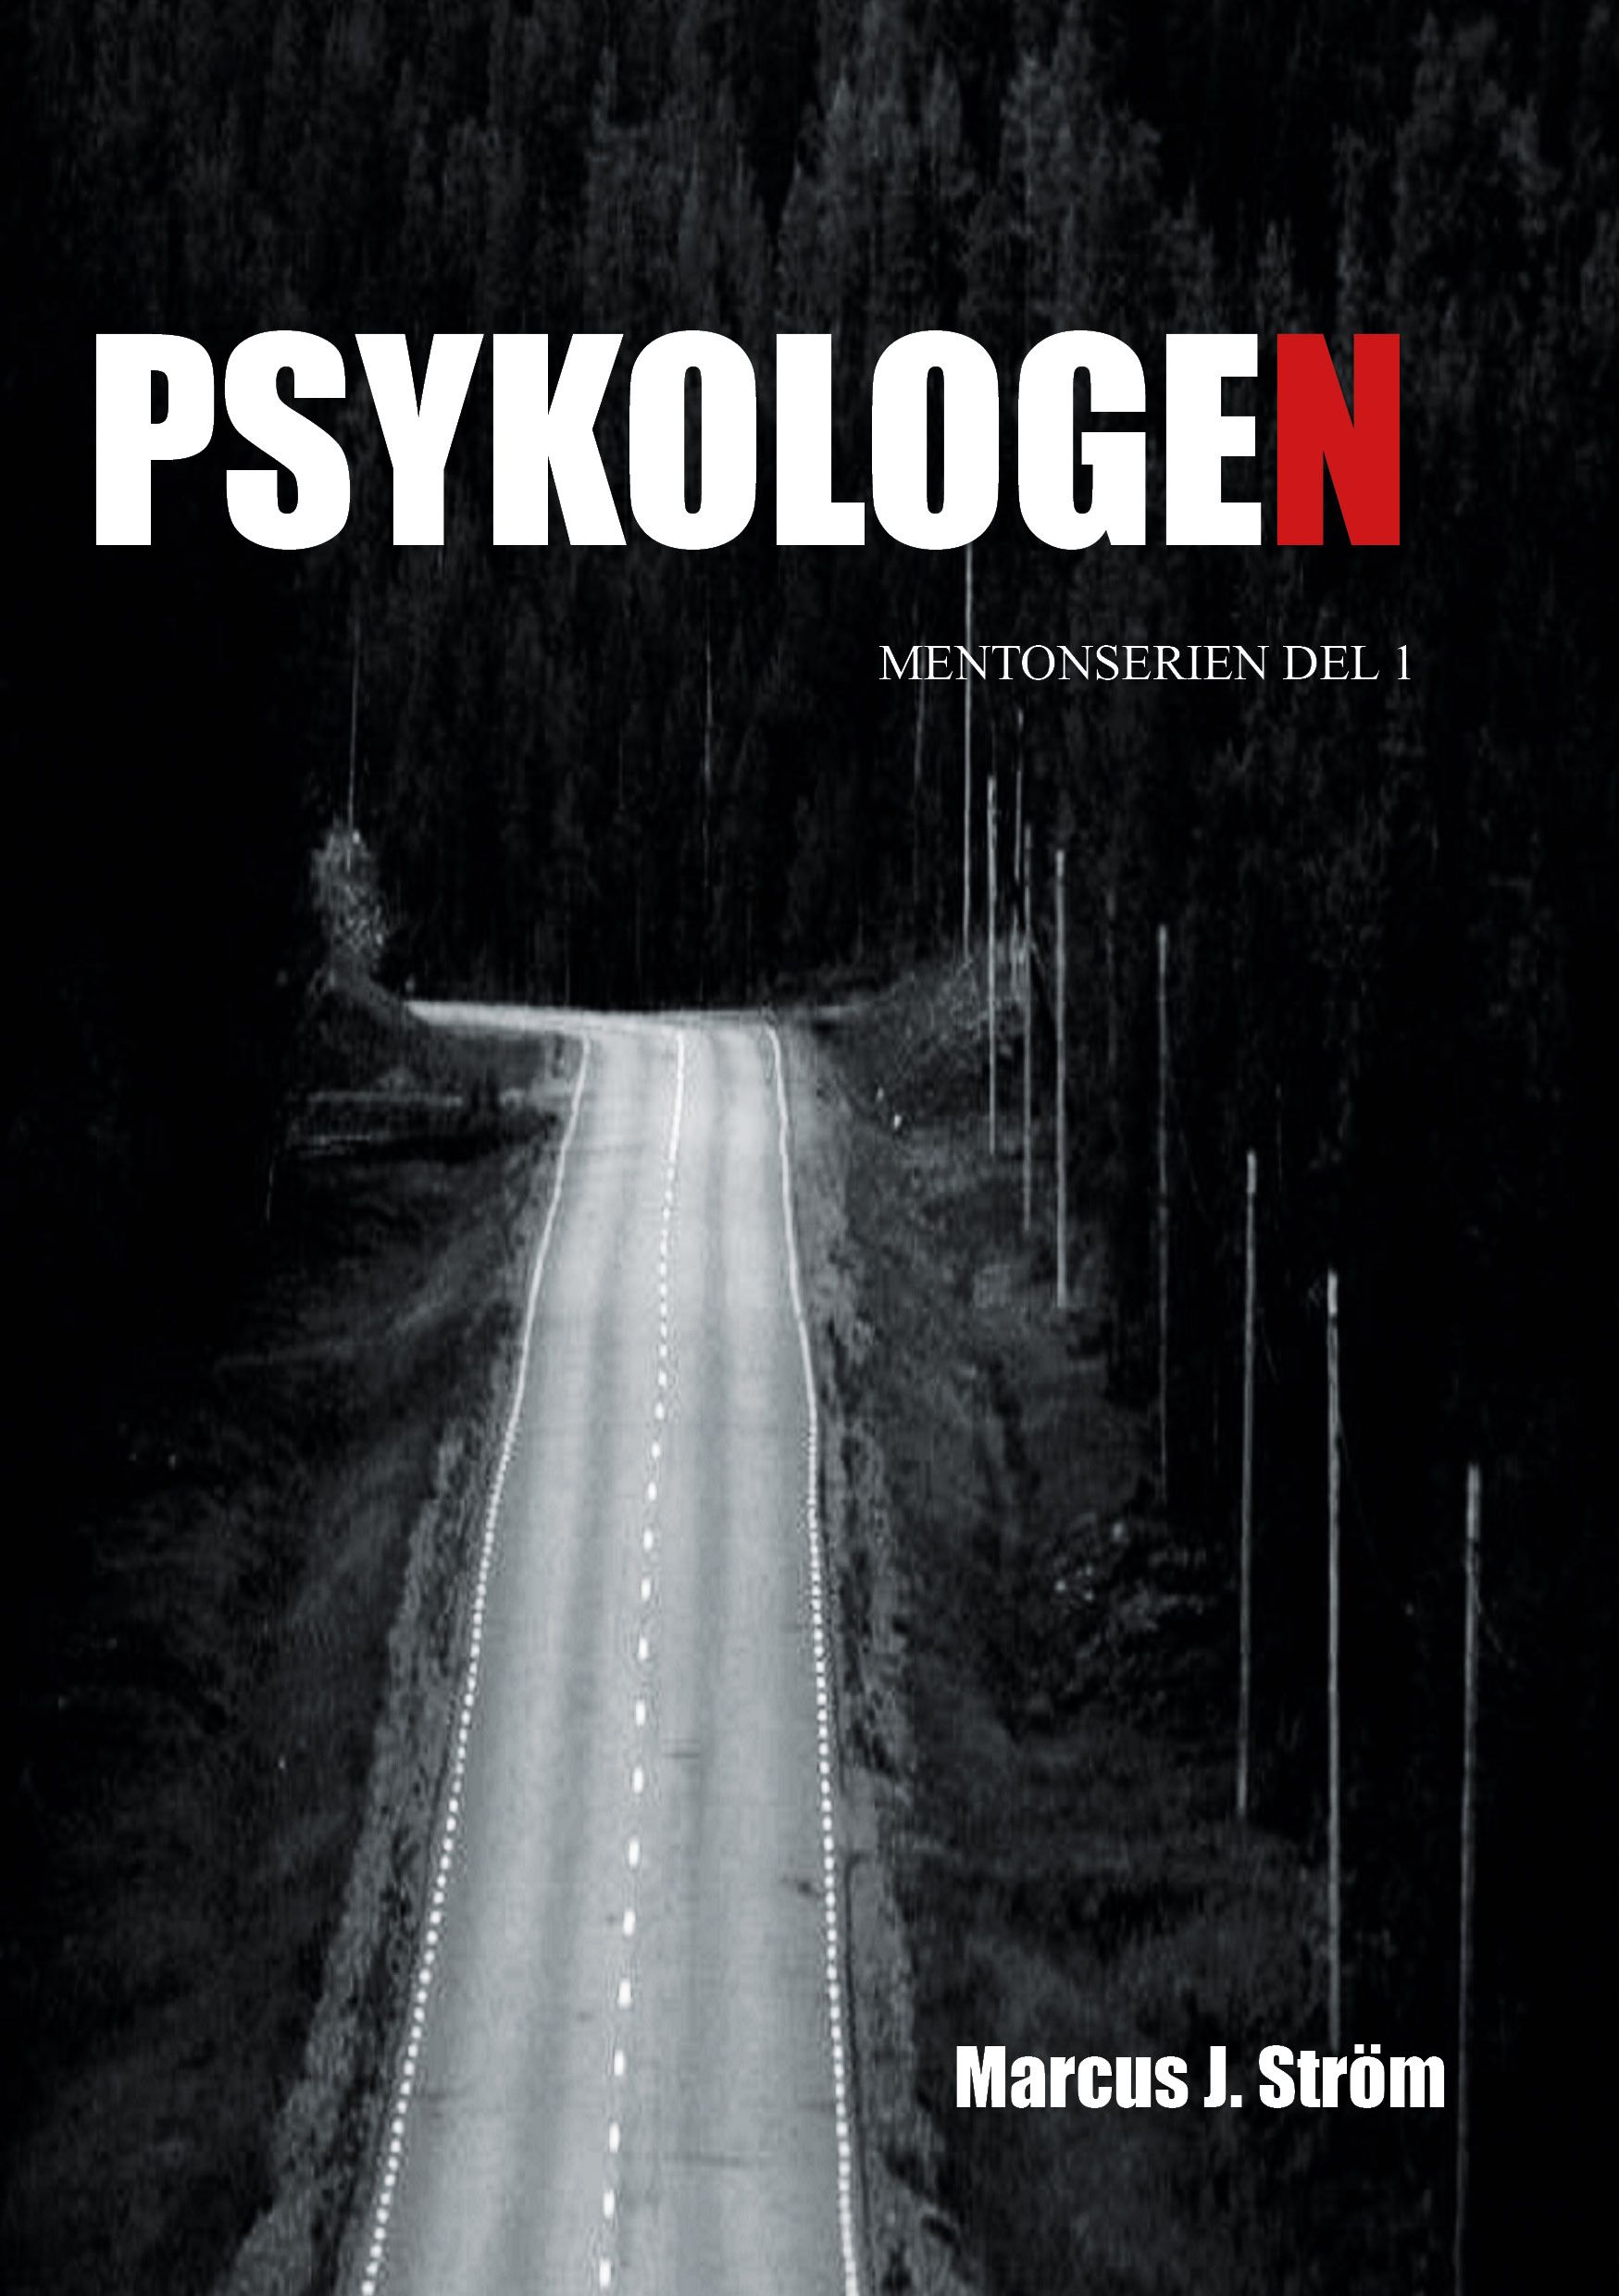 Psykologen, eBook by Marcus J. Ström